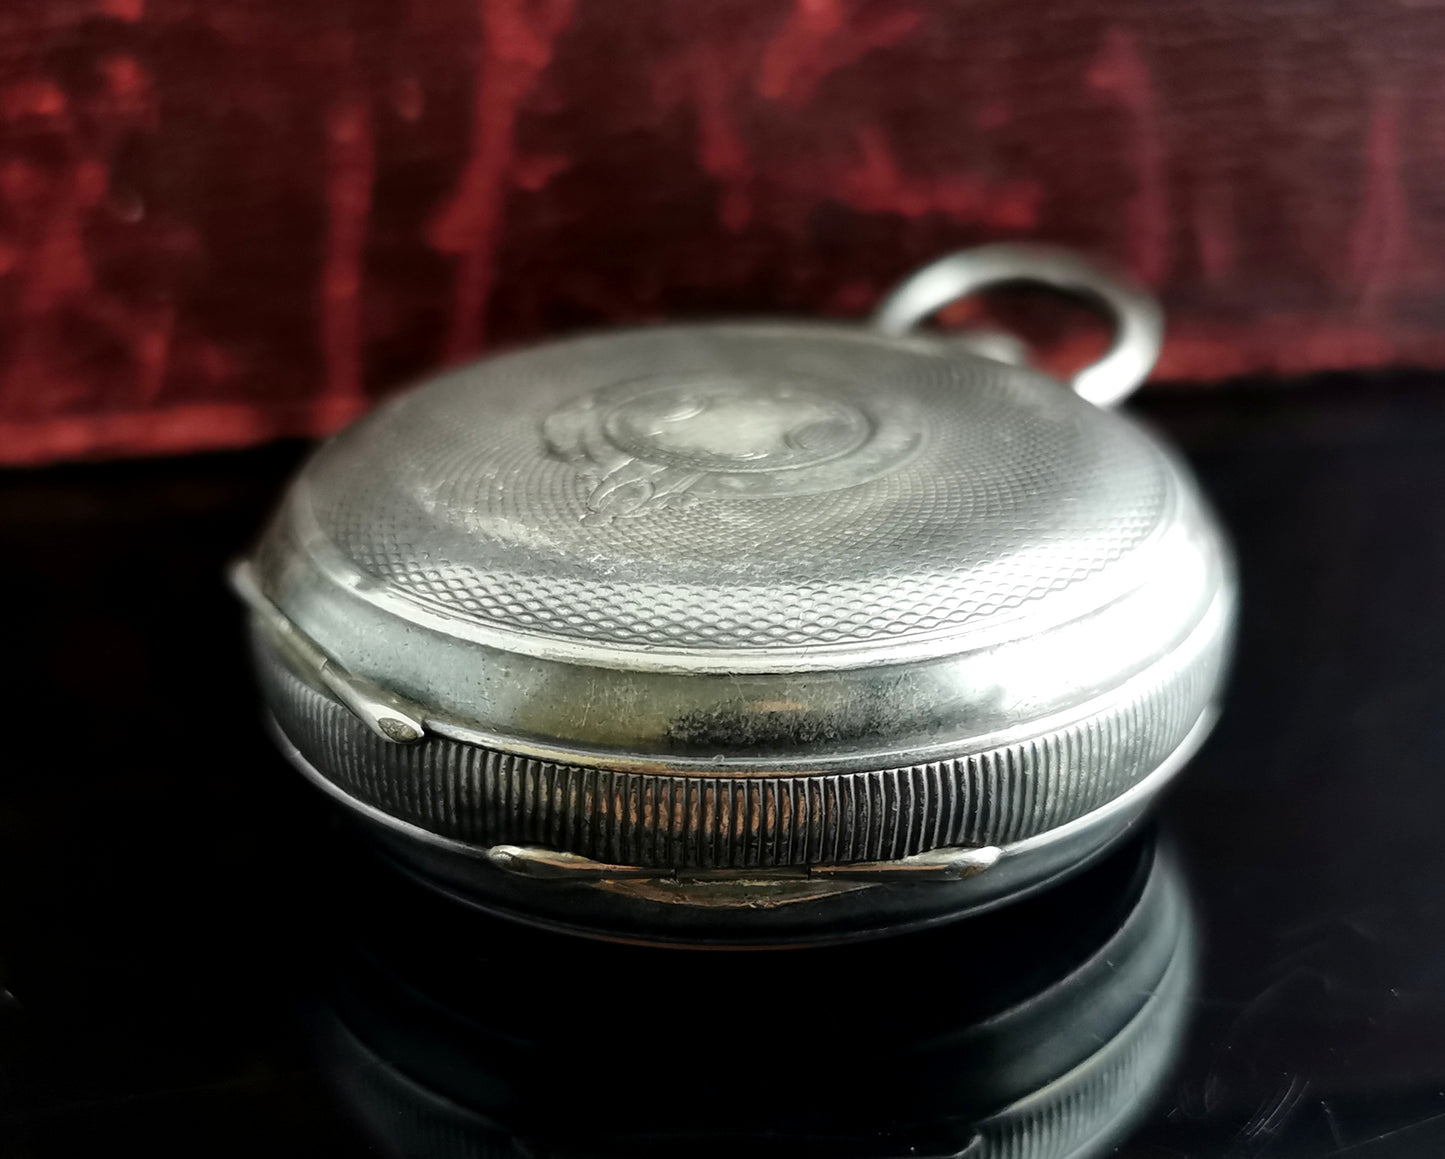 Antique Victorian silver pocket watch, Paragon